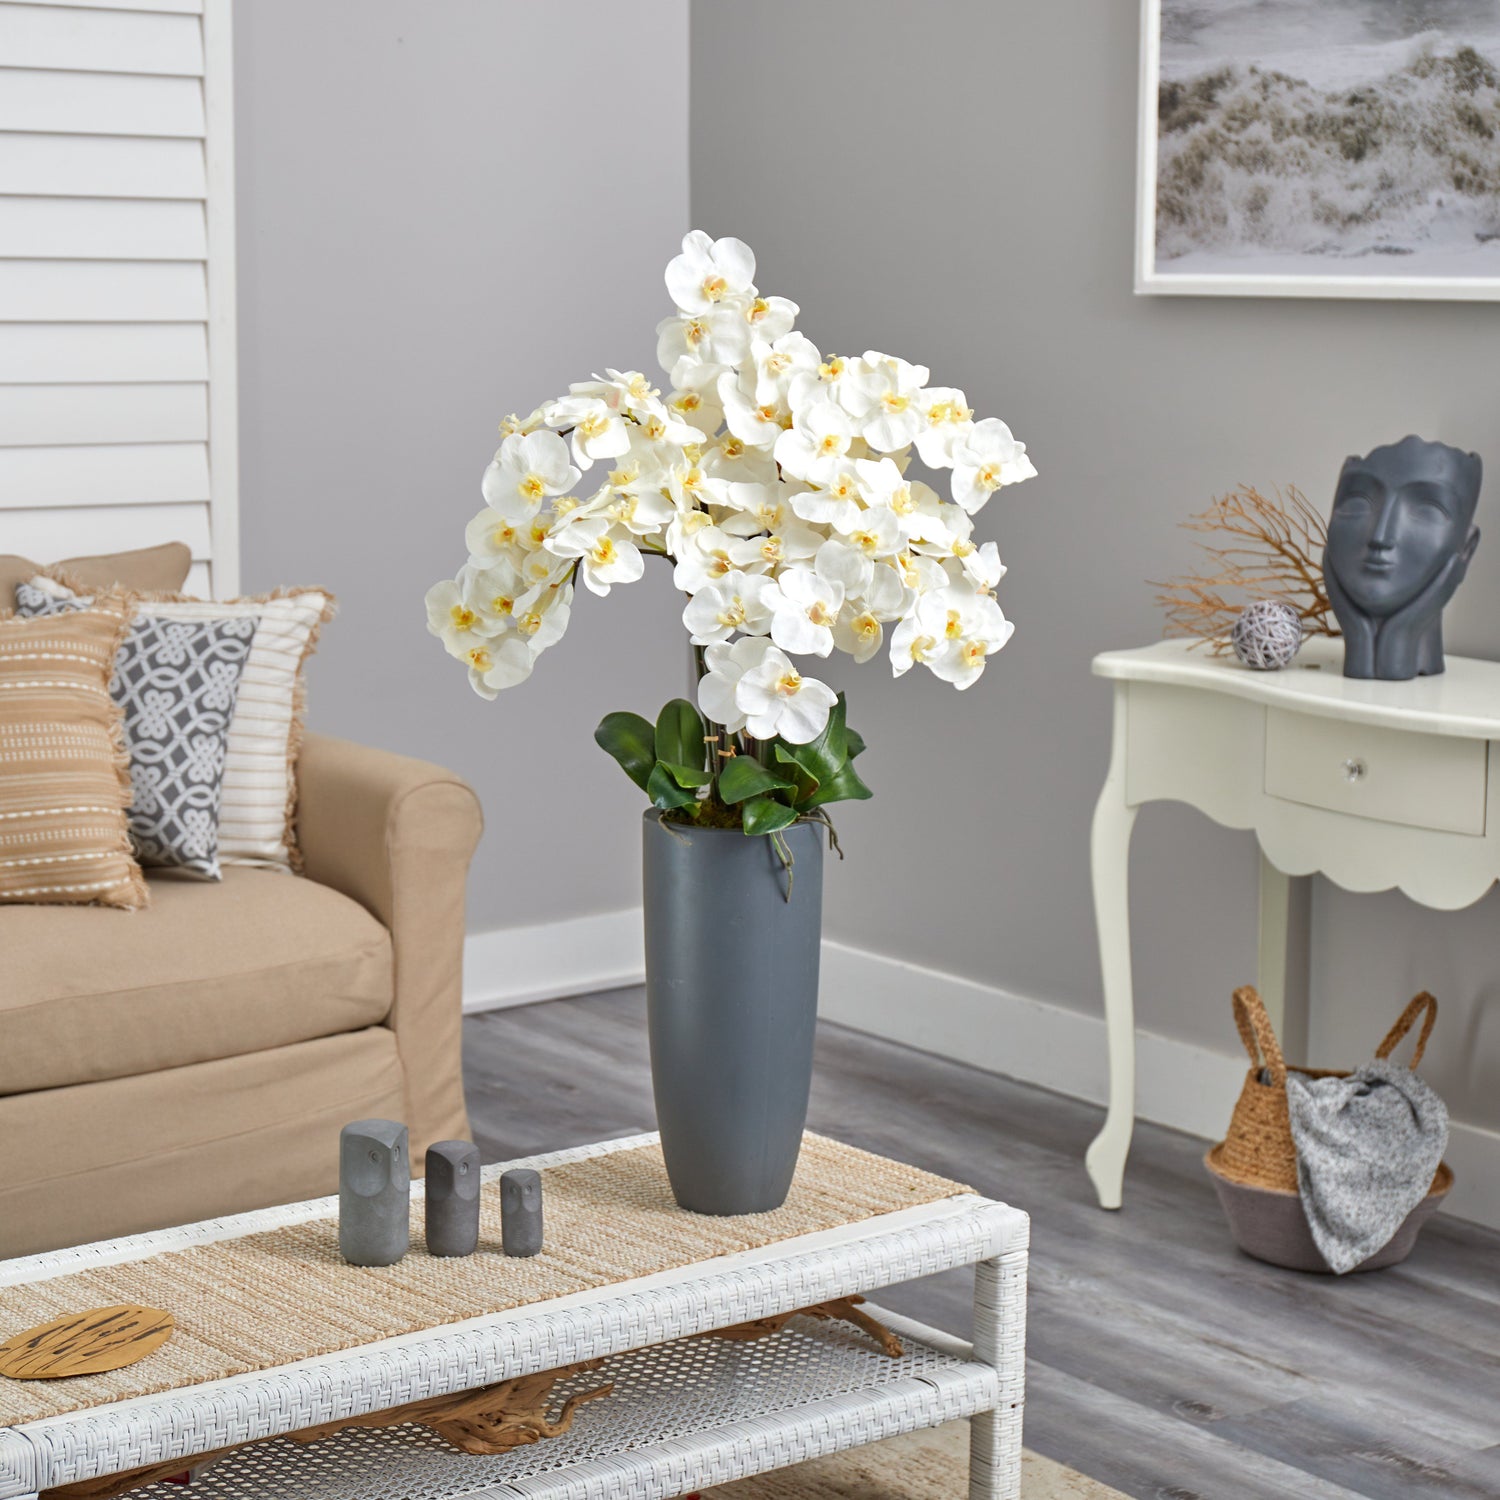 35” Phalaenopsis Orchid Artificial Arrangement in Gray Vase